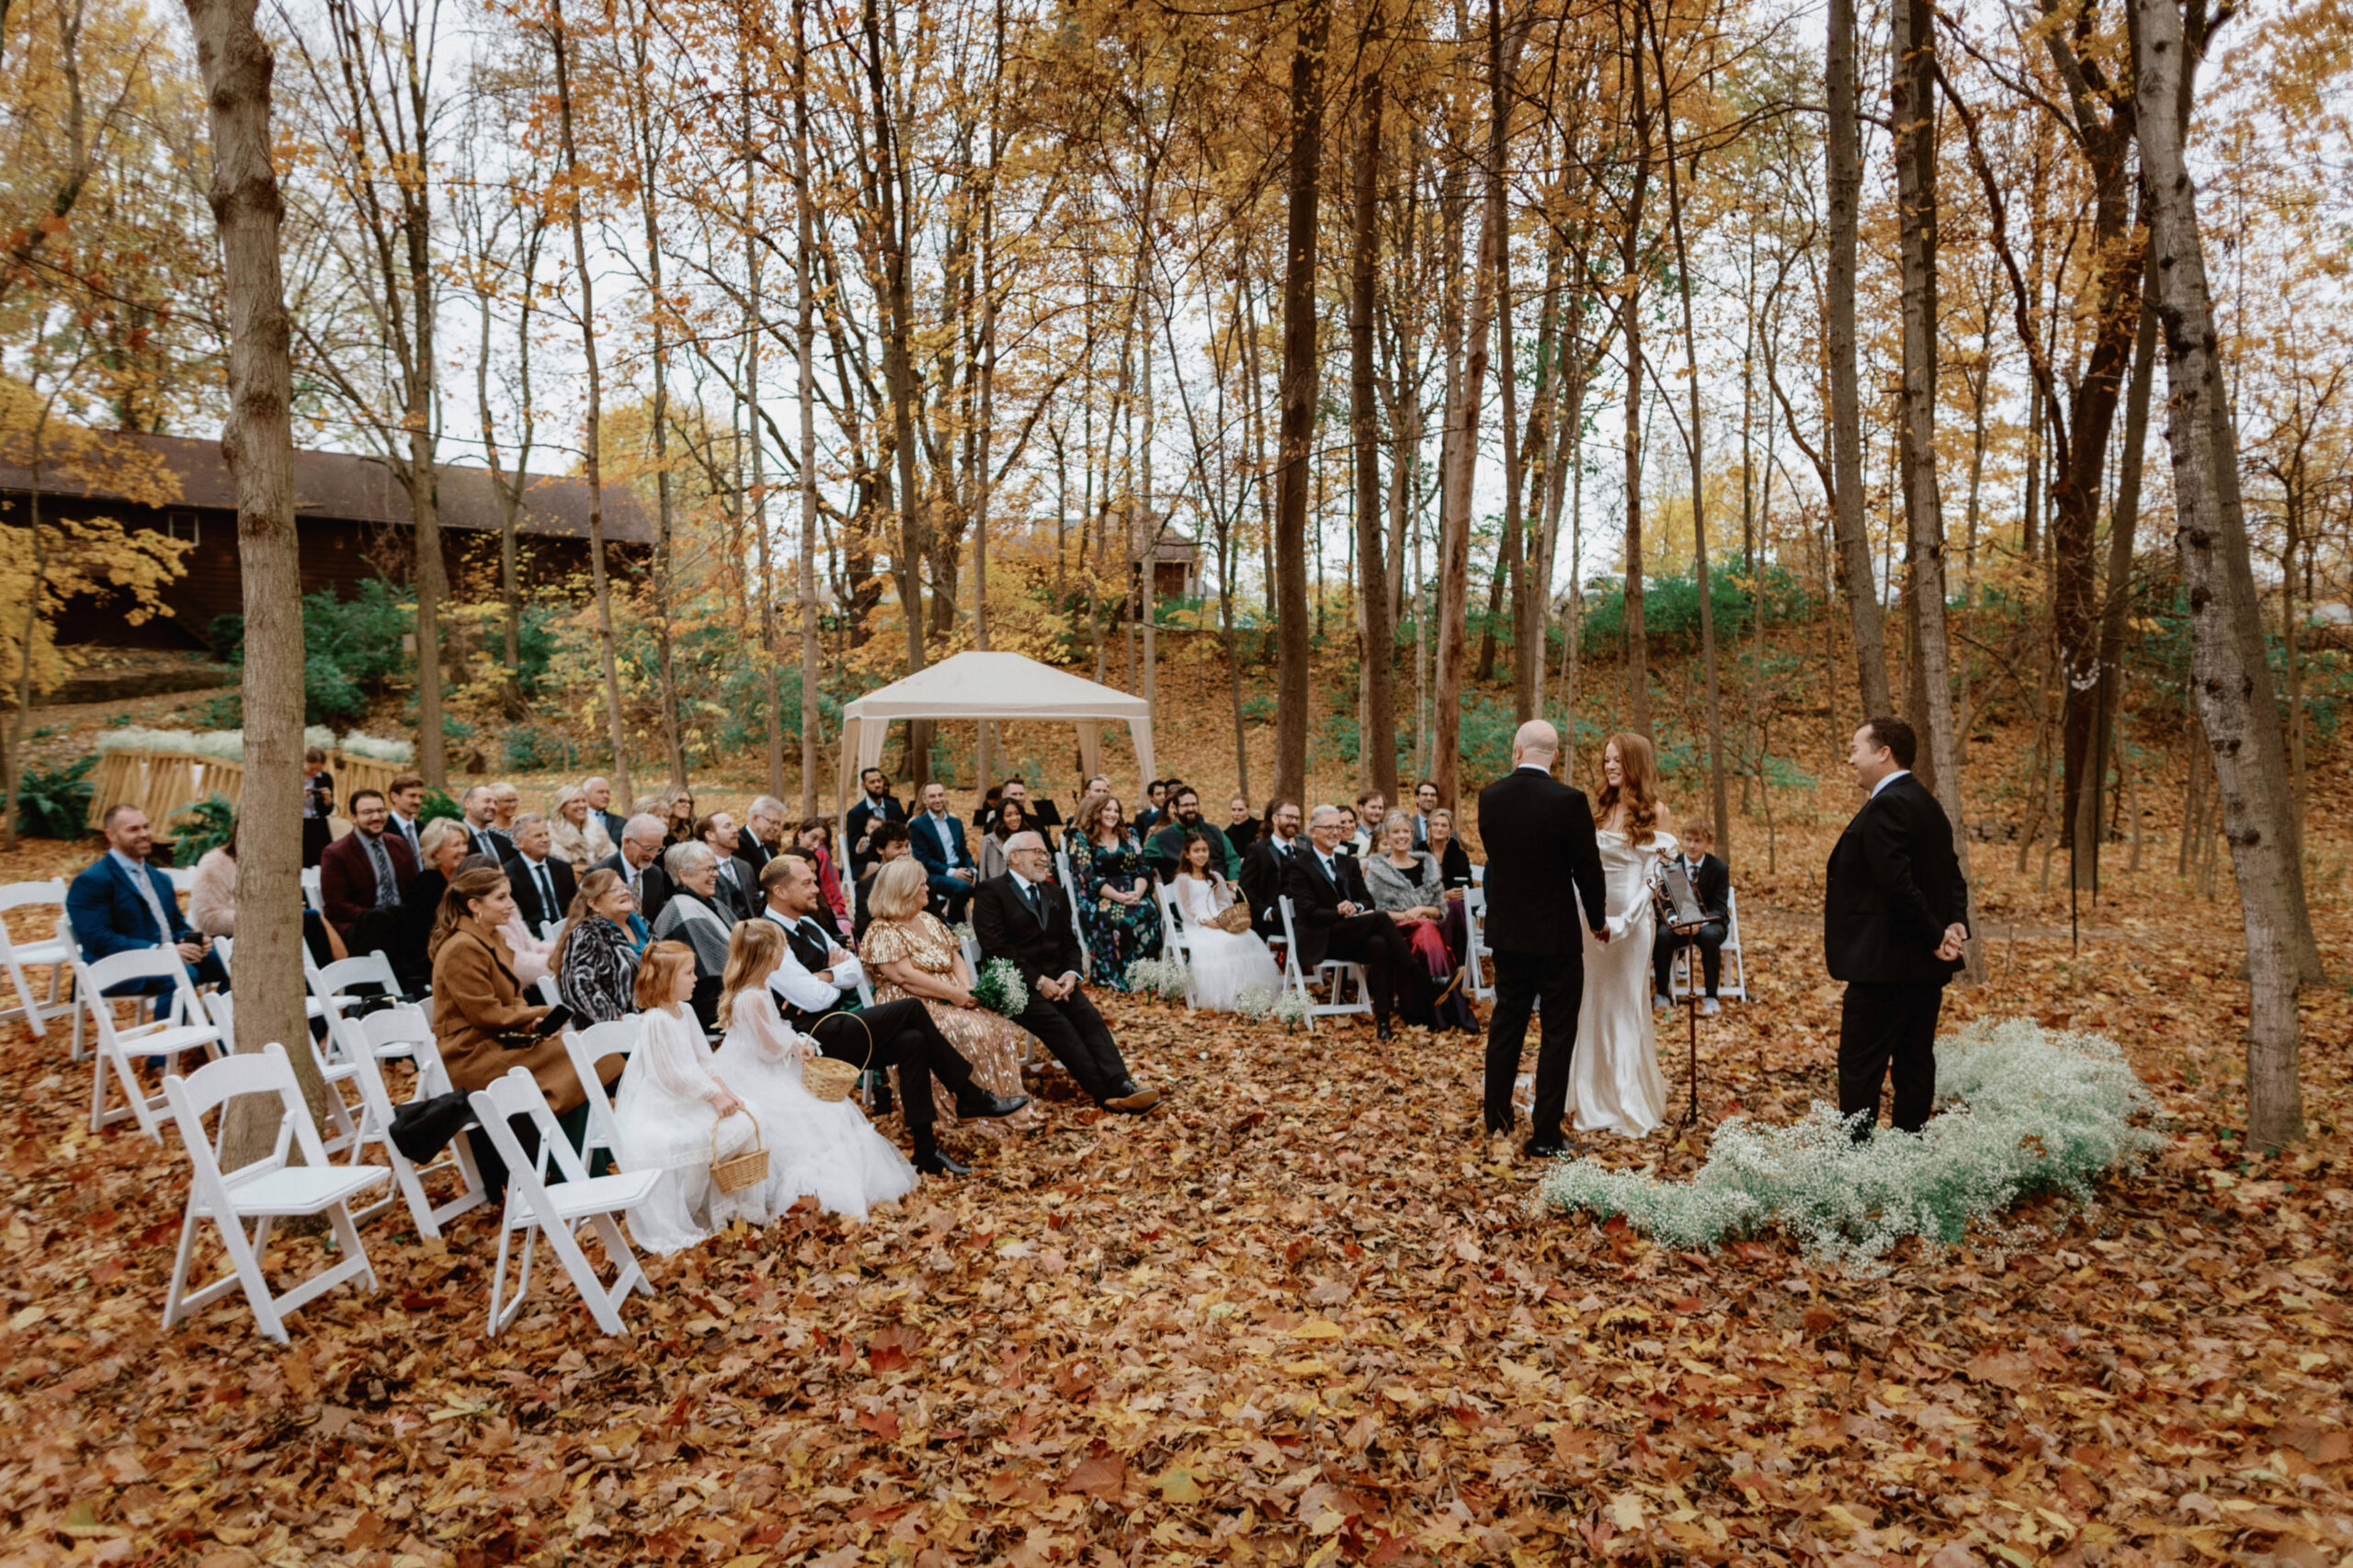 Wedding ceremony outdoors in autumn. Unposed wedding photos by Jenny Fu Studio 